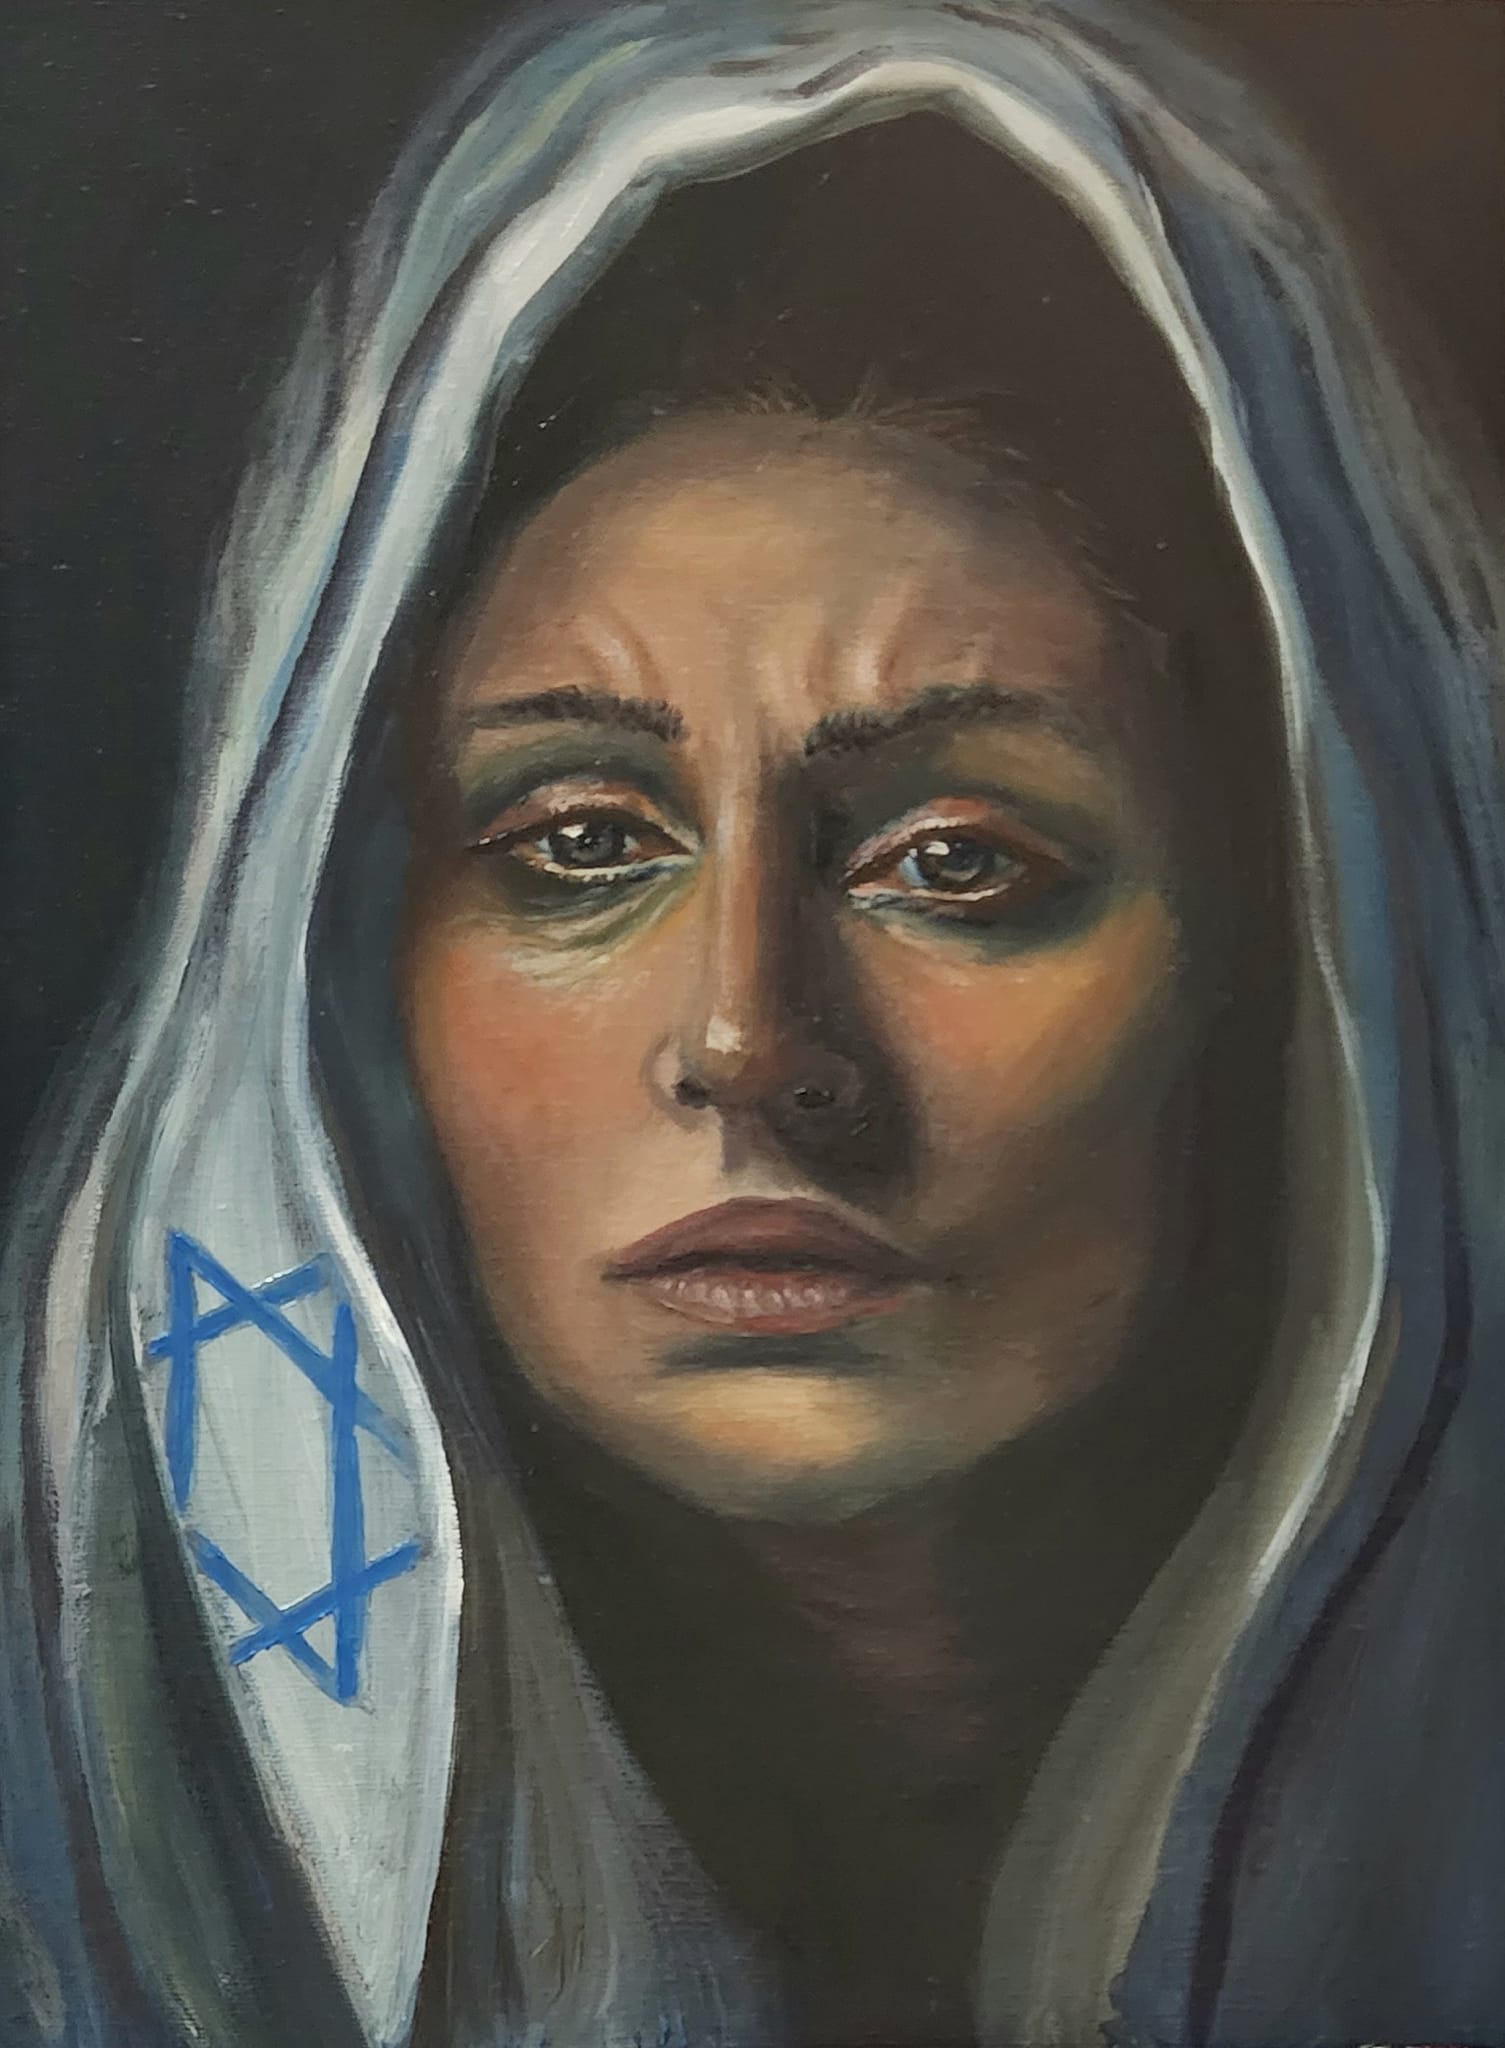 #JewishToo, דיוקן אישה יהודייה, ציור של יפית סרנגה